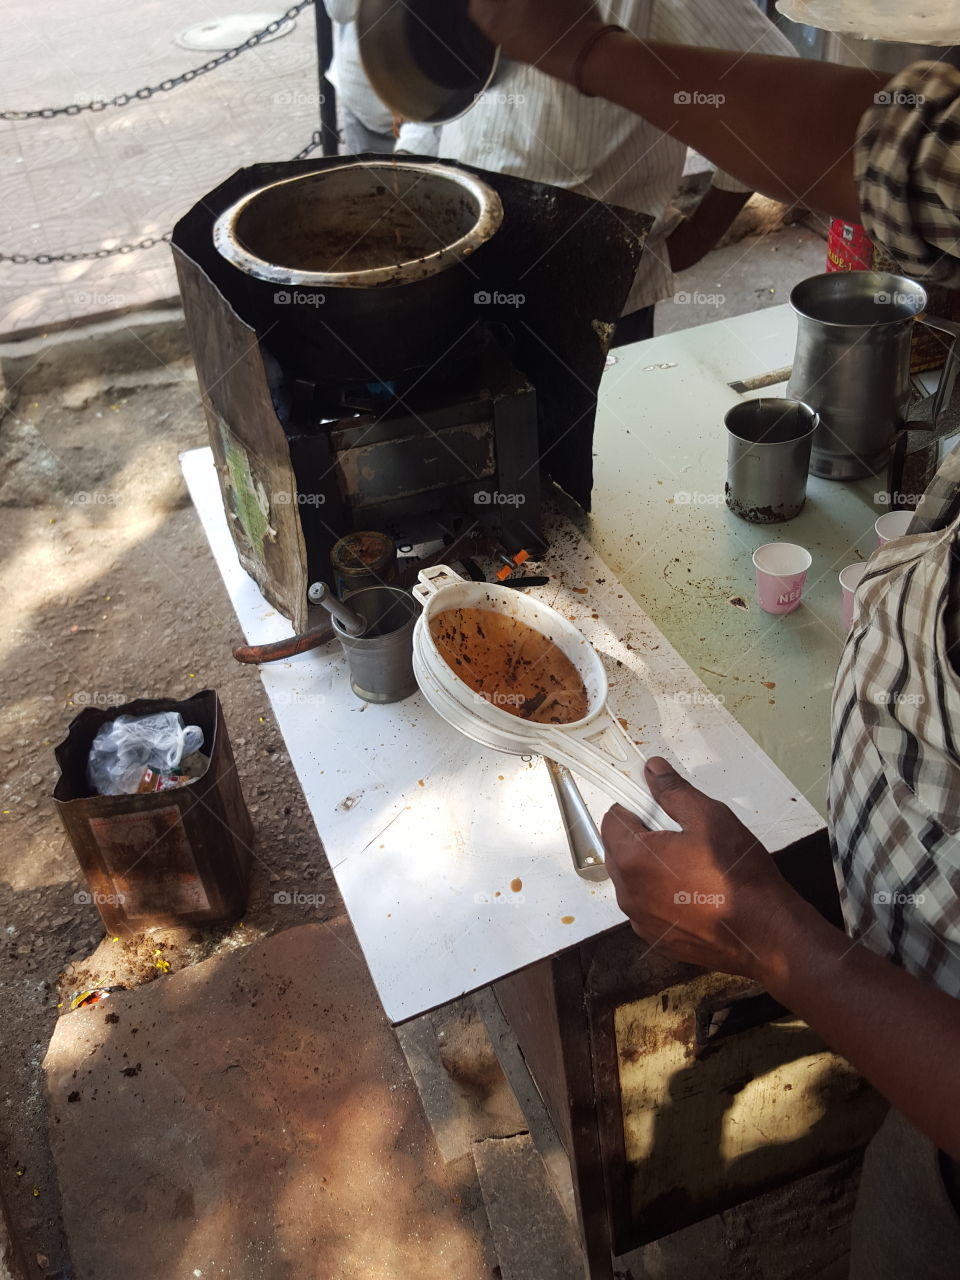 Indian Tea Kiosk owner preparing tea for customers